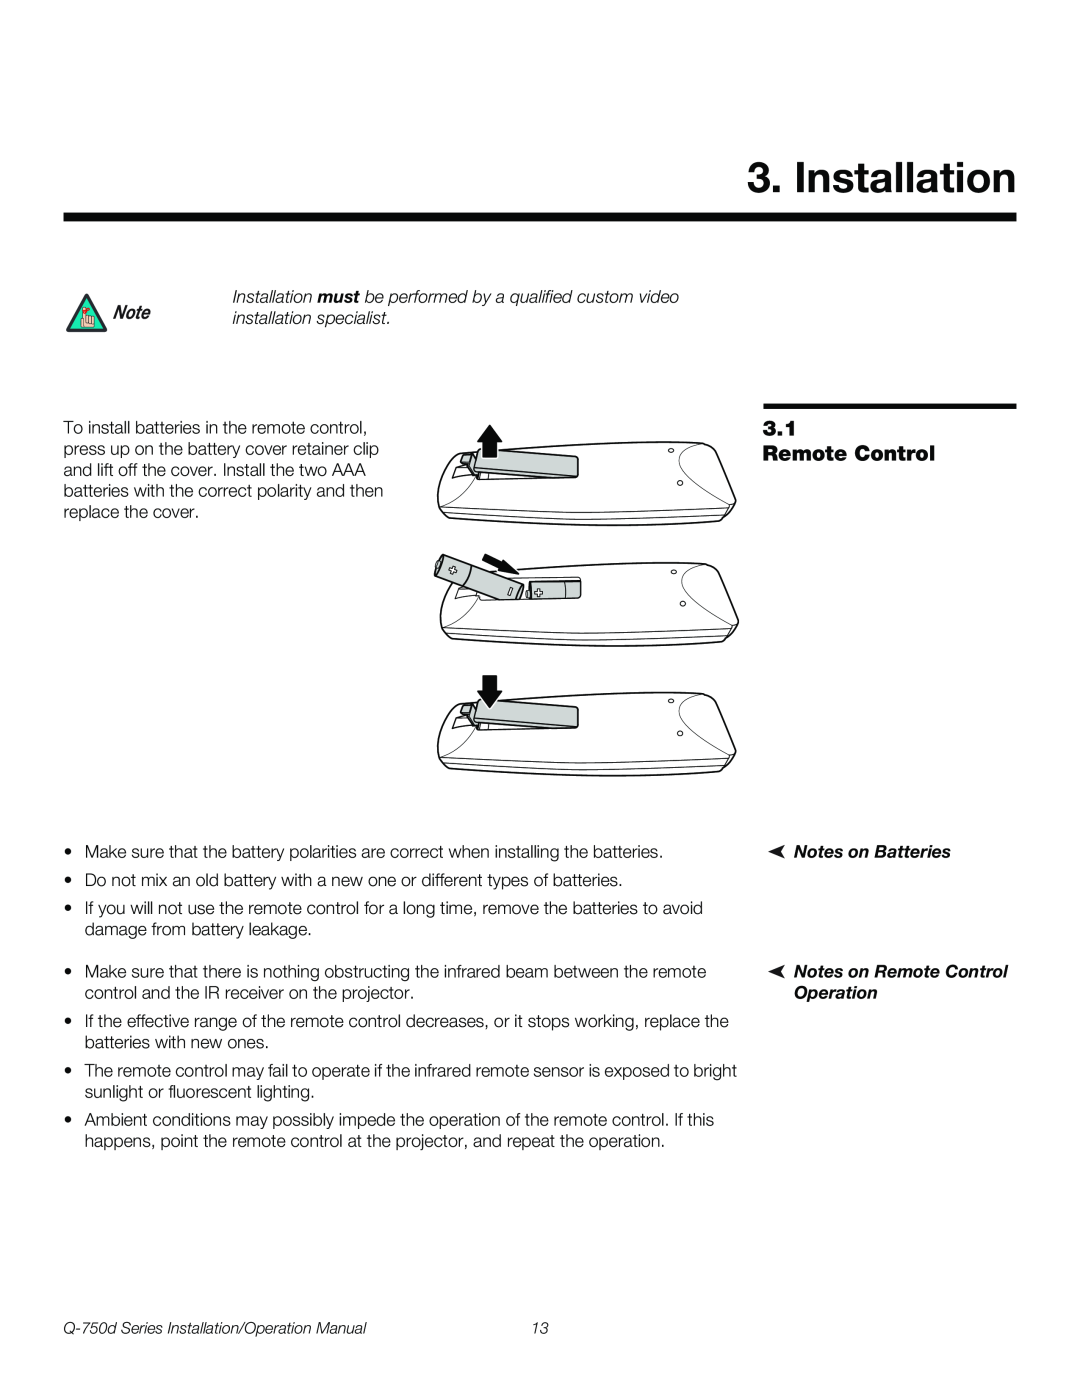 Runco Q-750D operation manual Installation, Remote Control 